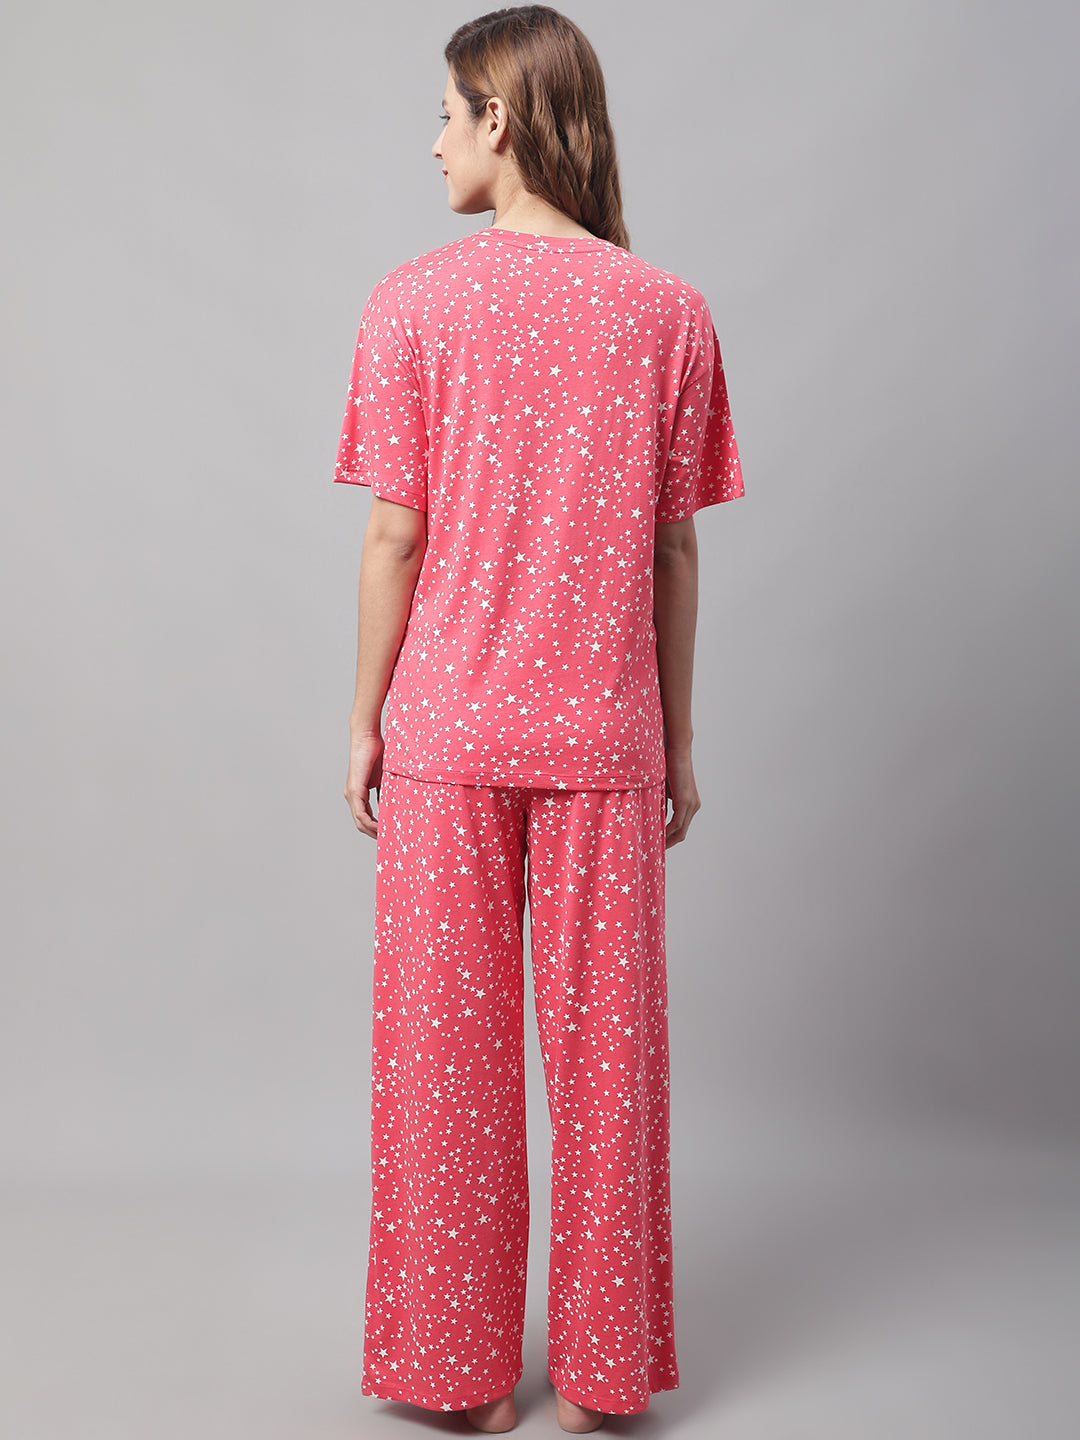 Pyjama Sets_MJKSS23151A